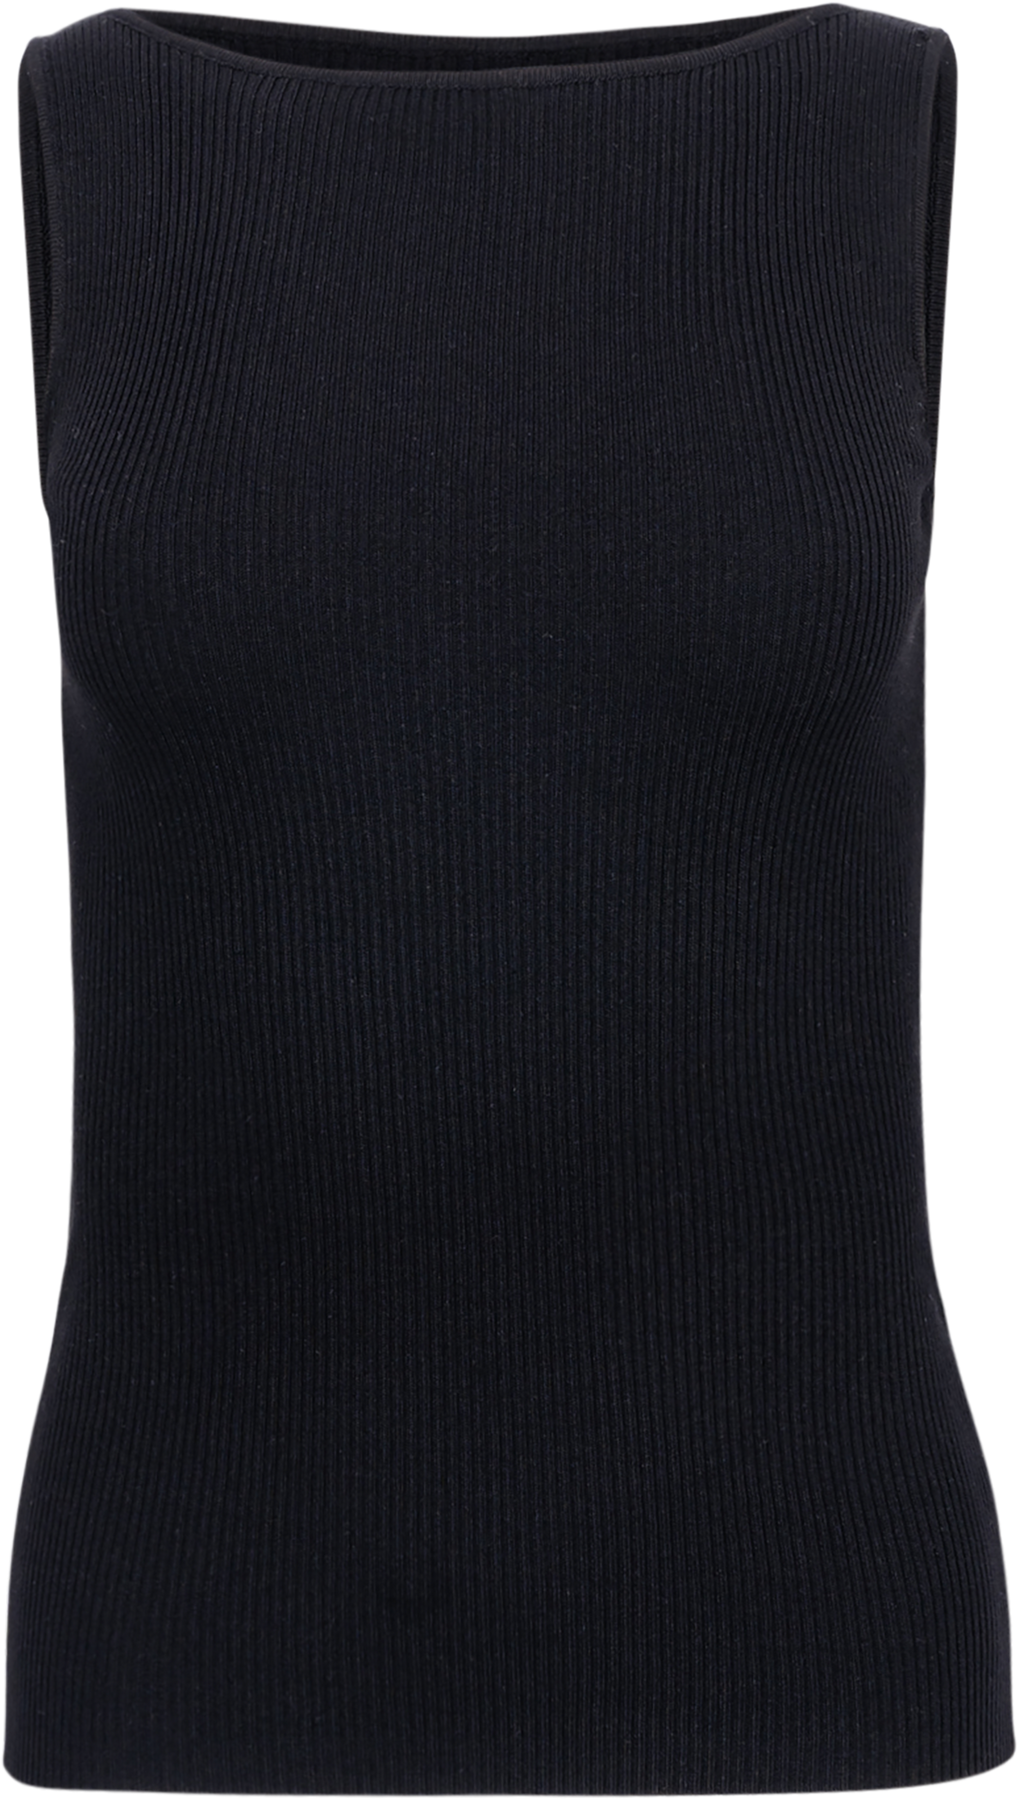 Corine Knit Tank Top - Black